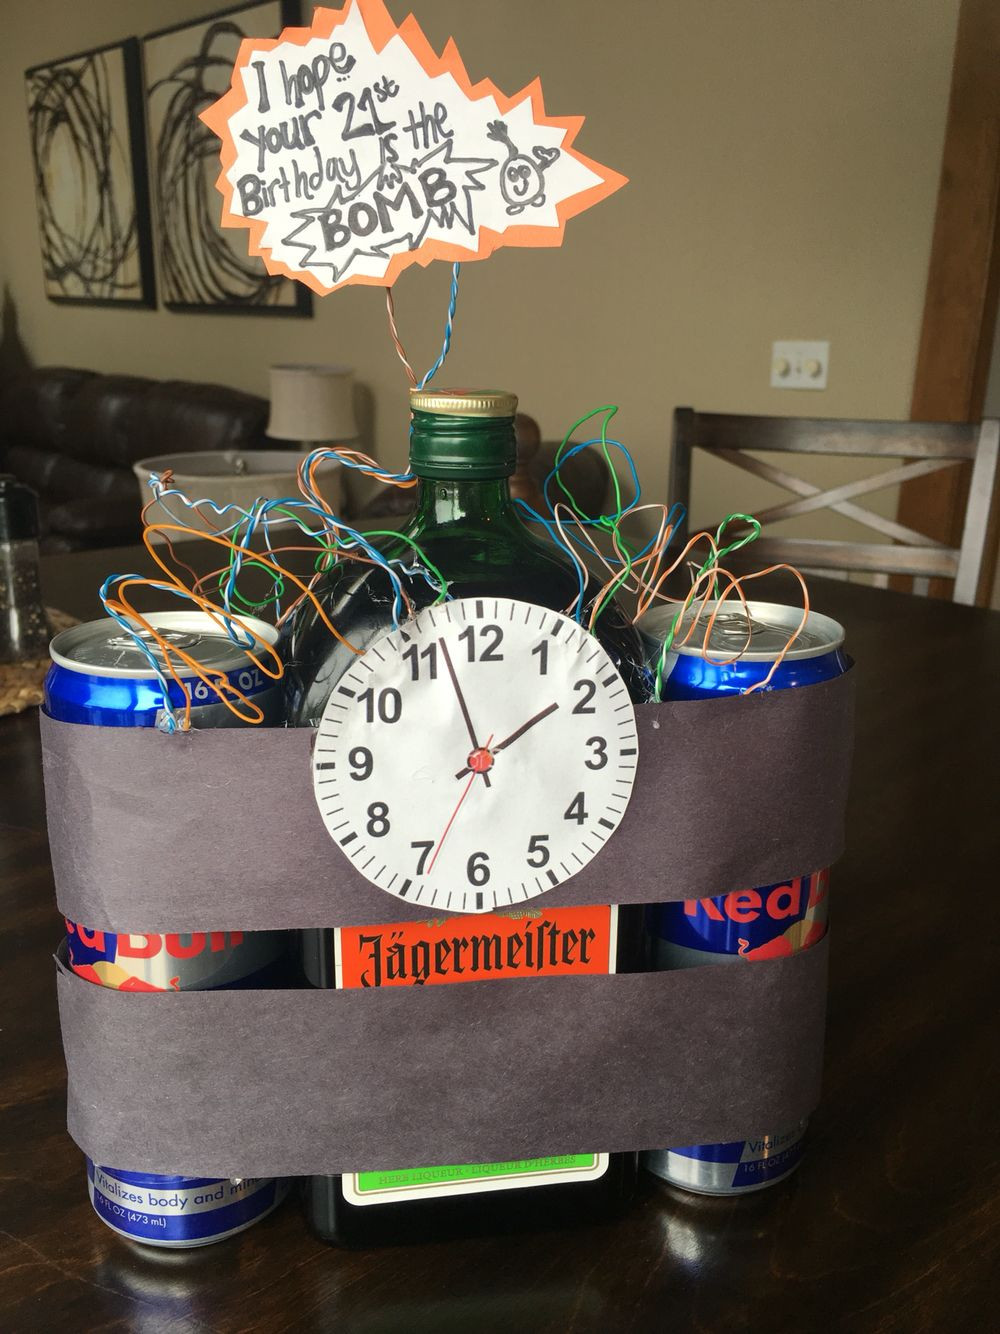 21St Birthday Gift Ideas For Him
 Boyfriends 21st birthday idea Jäger s Creative